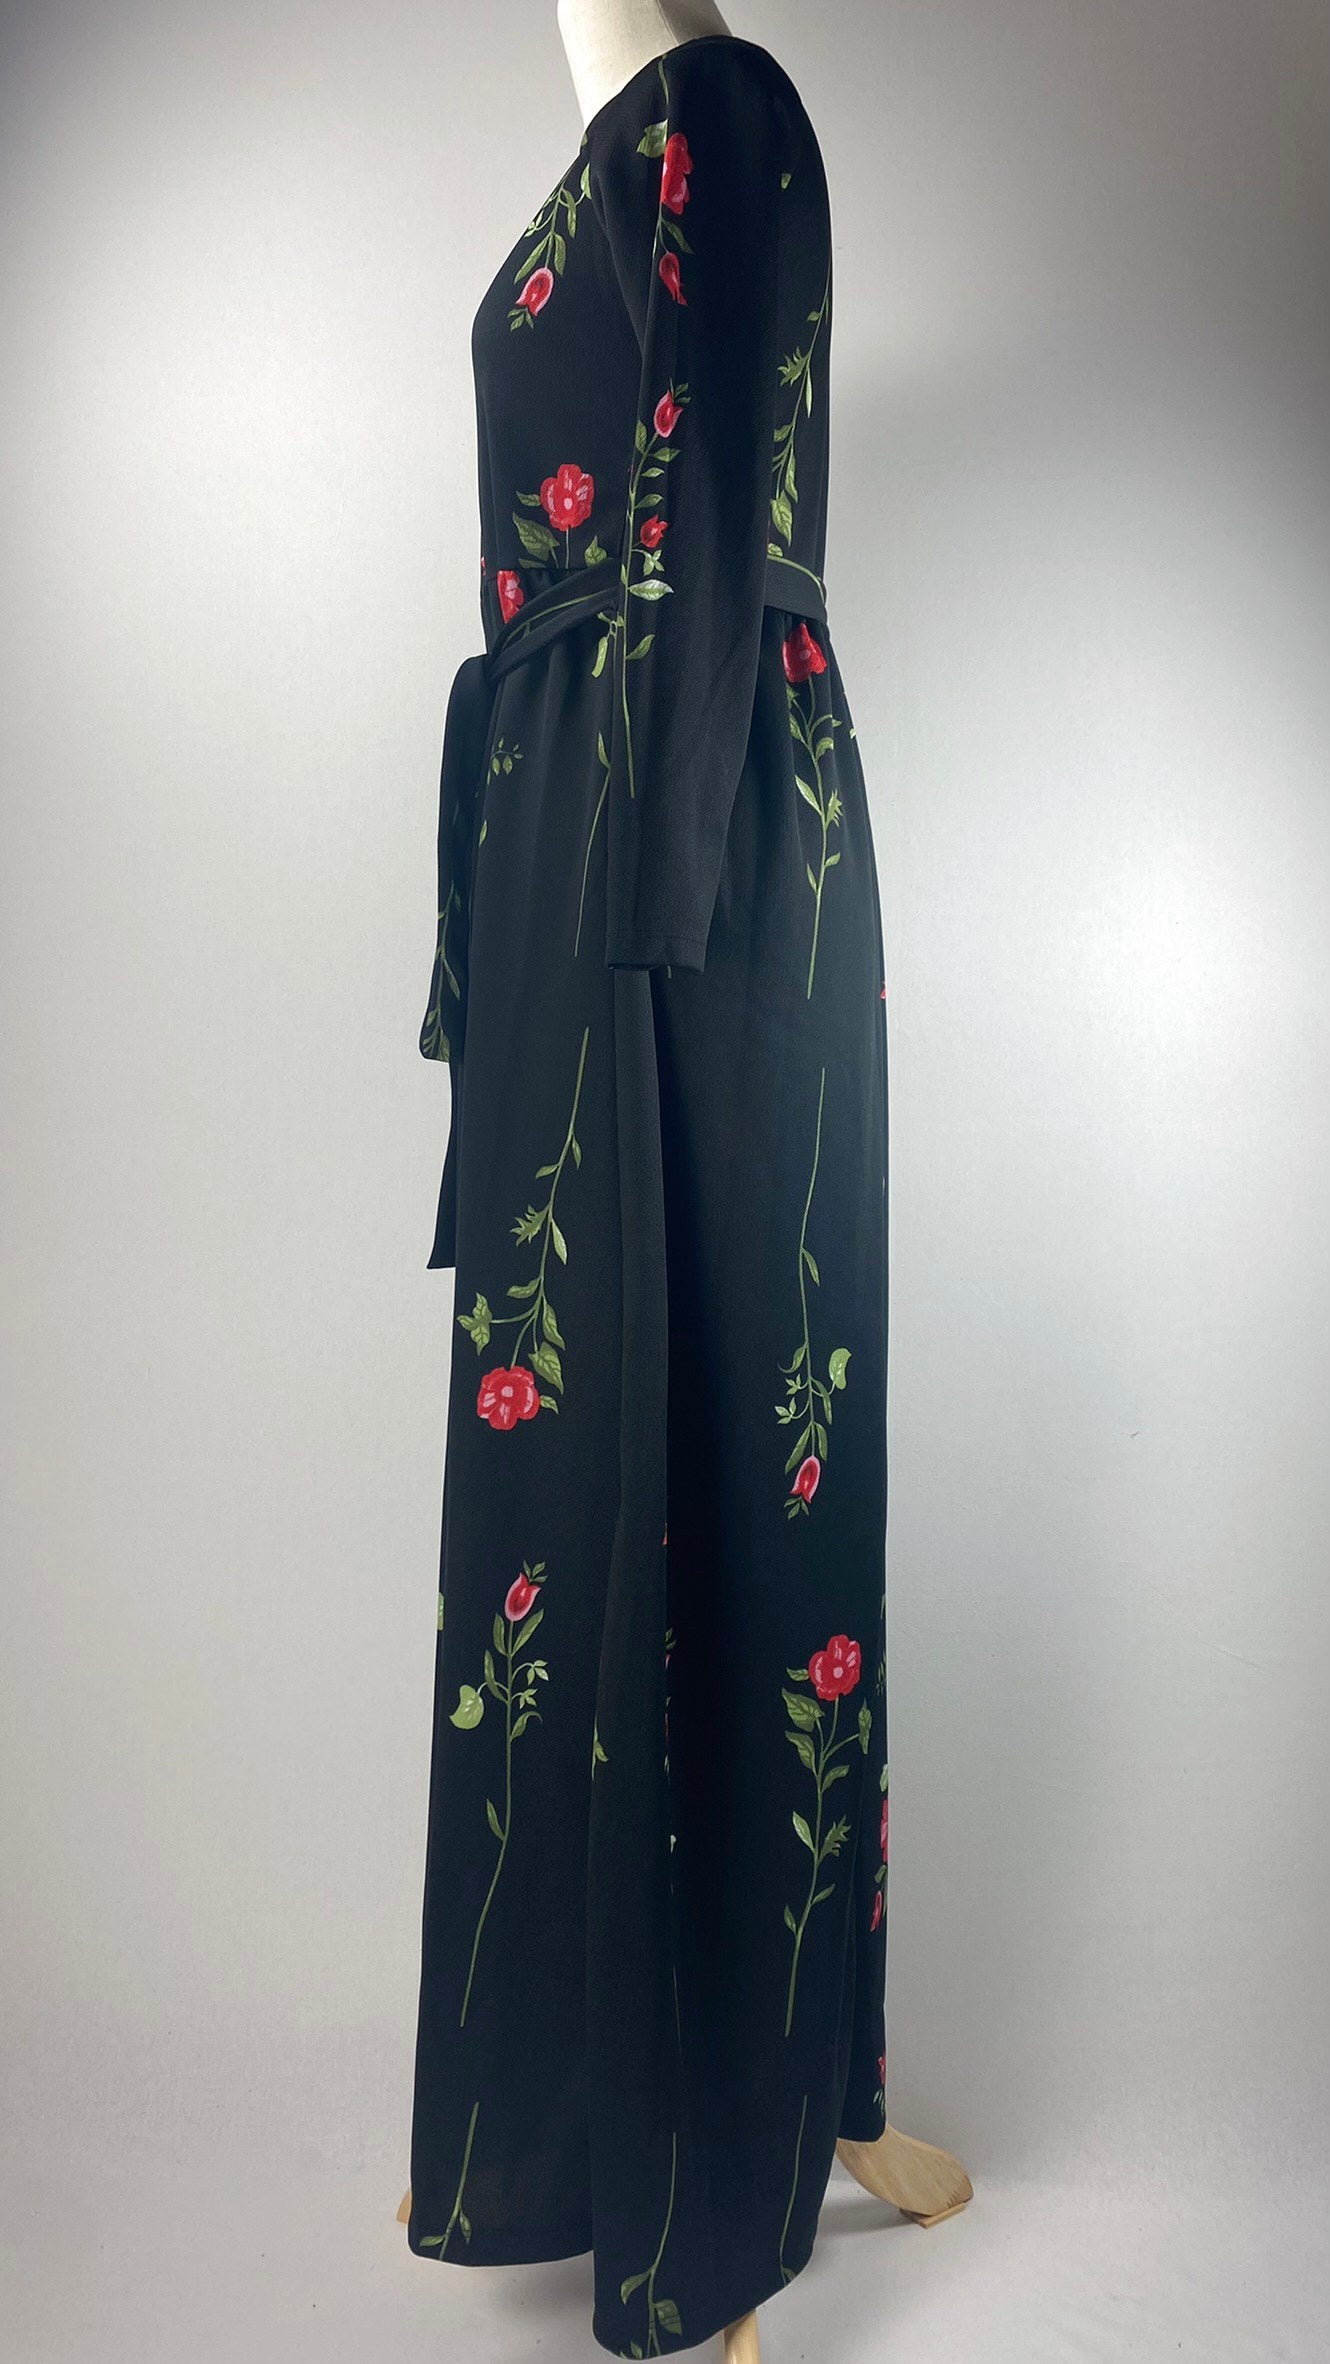 Long Sleeve Printed Maxi Dress, Black